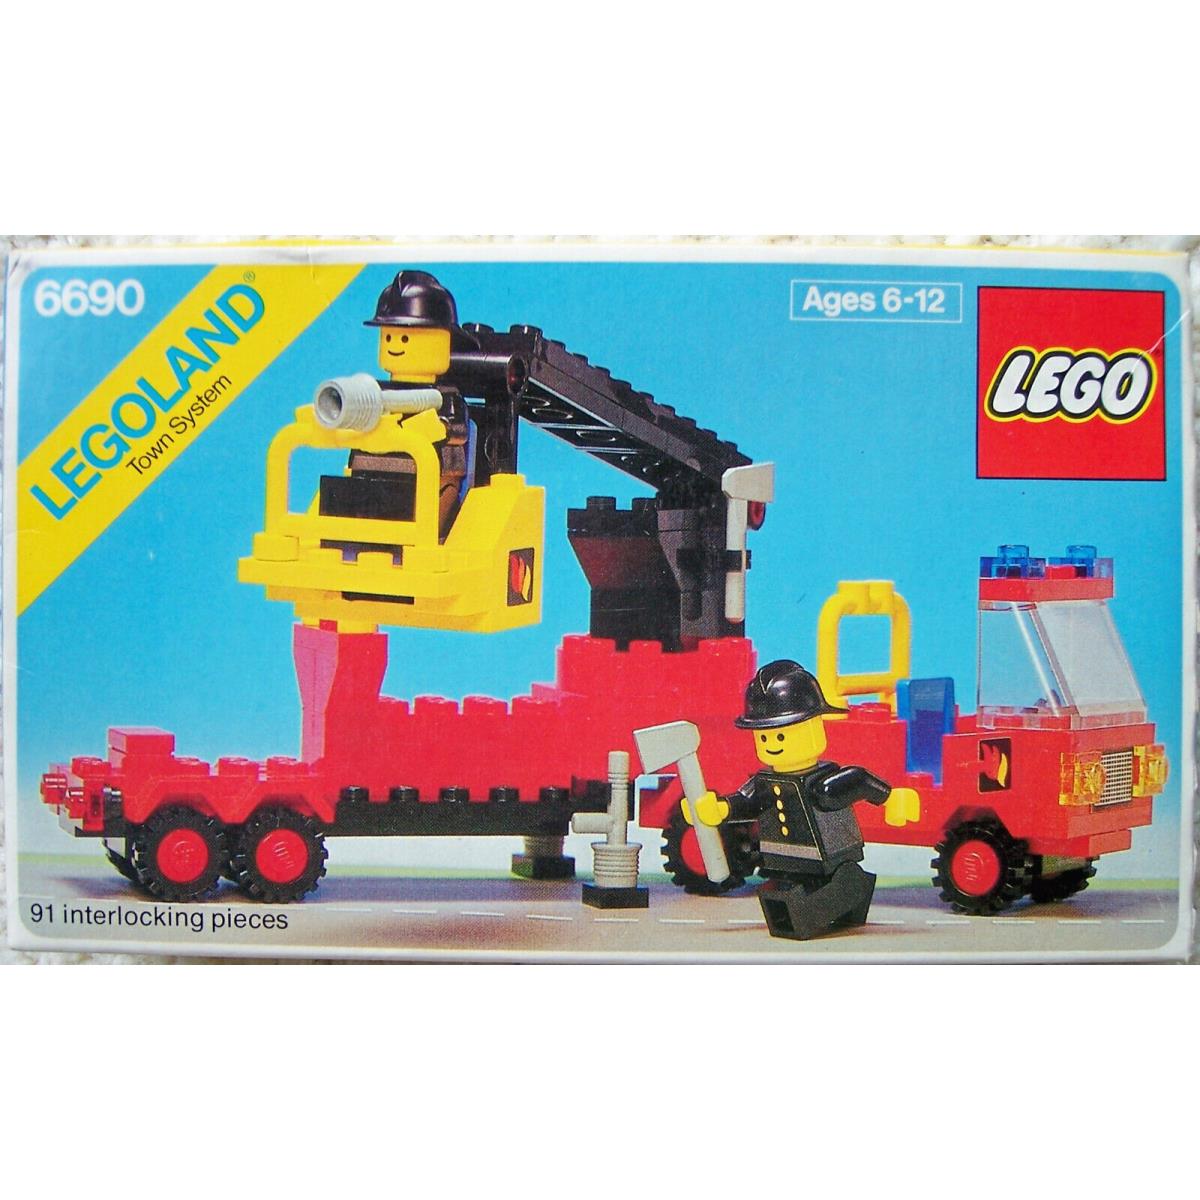 Lego Town 6690 Snorkel Pumper Vintage Fire Truck Emergency Rescue City